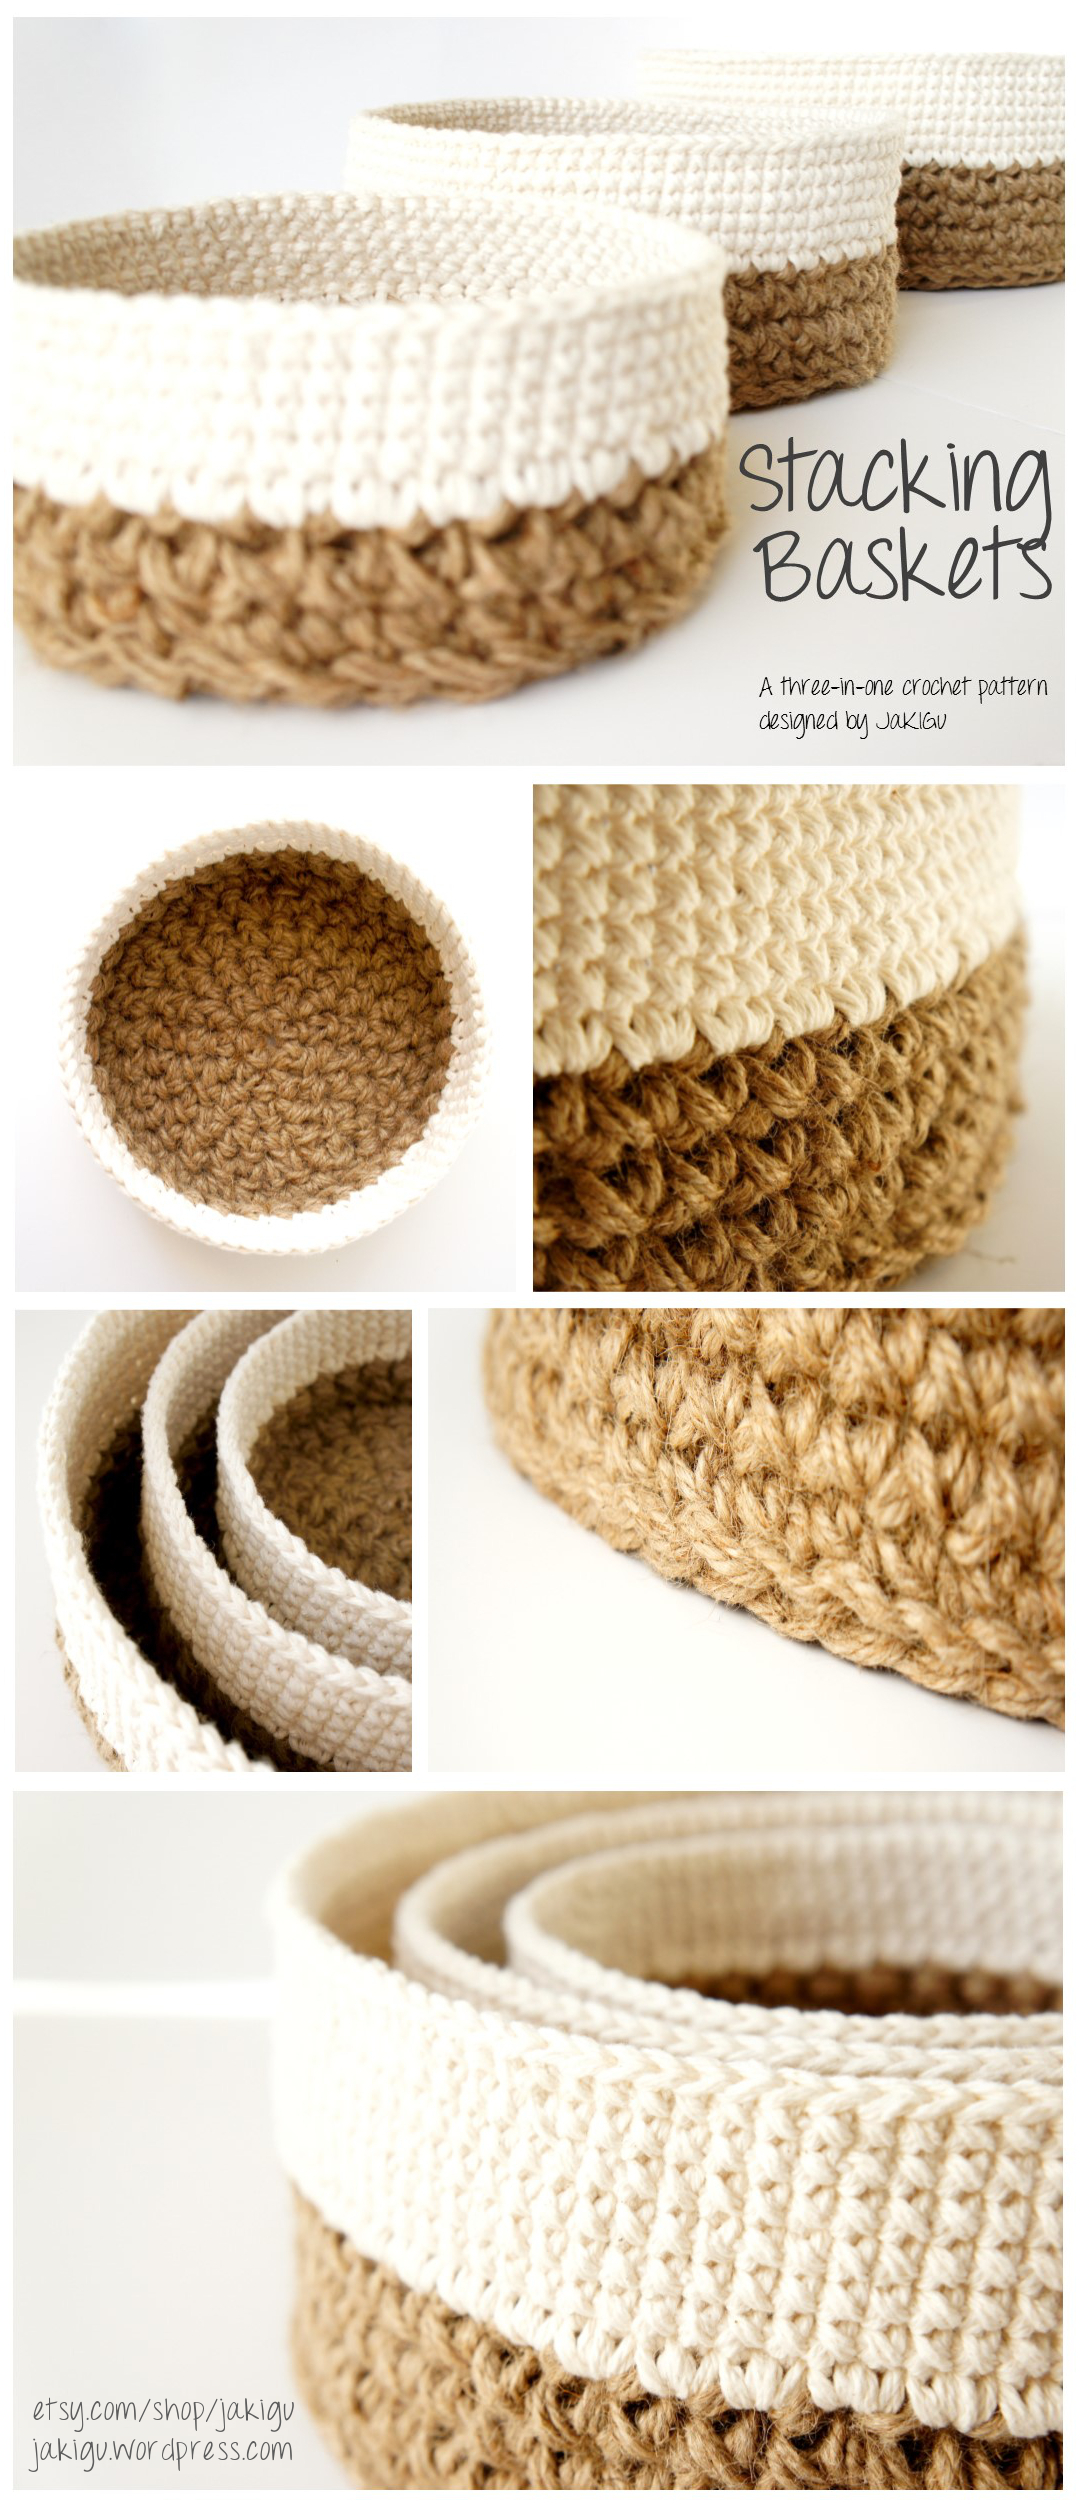 Stacking Baskets Crochet Pattern Designed by JaKiGu